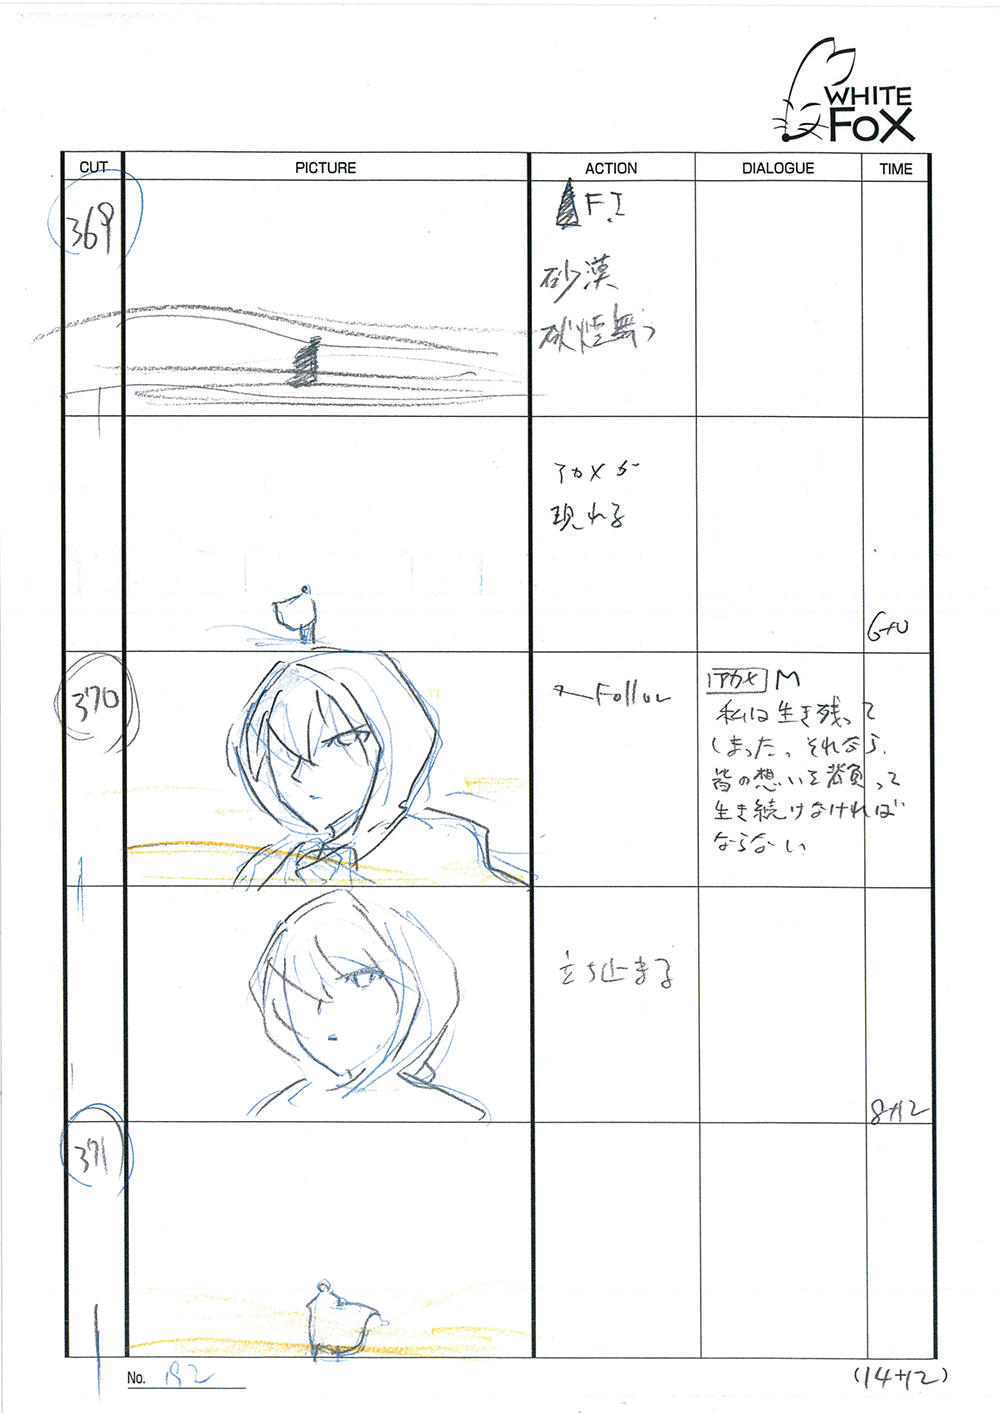 Akame ga Kill Episode 24 Storyboard Leak 197